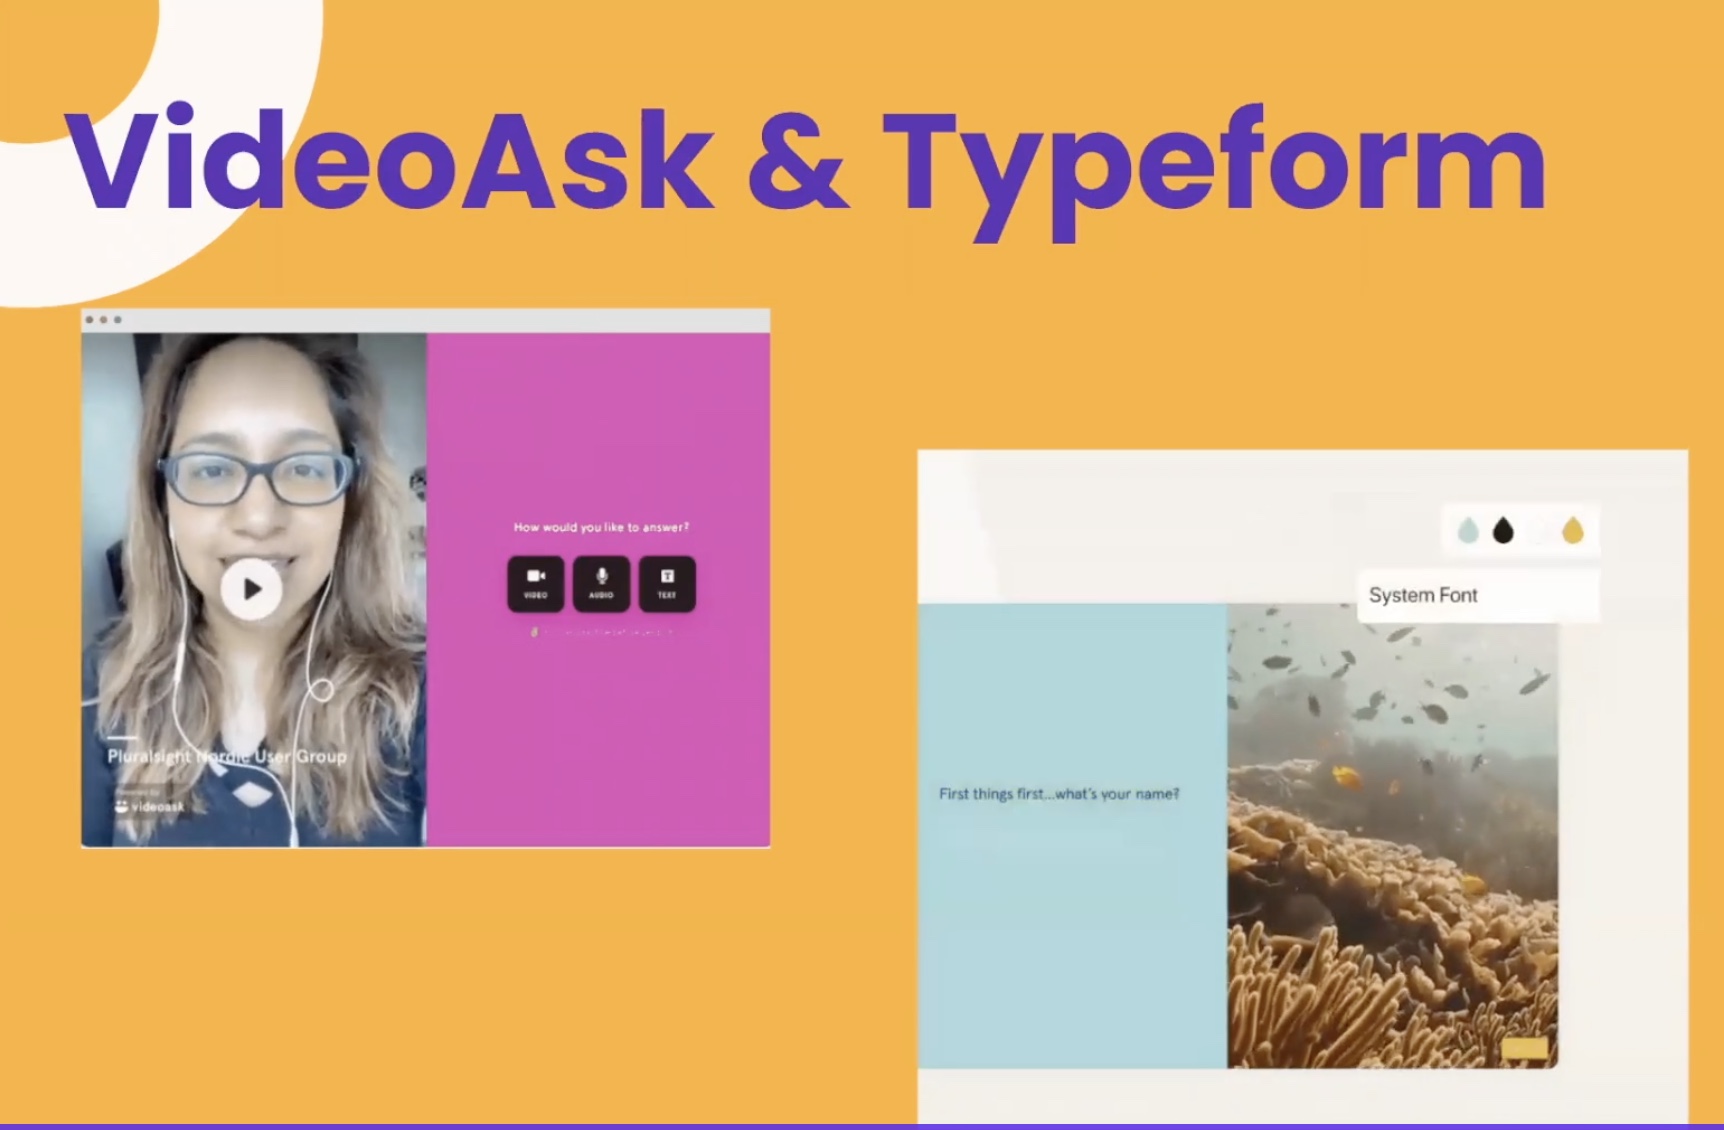 VideoAsk & Typeform